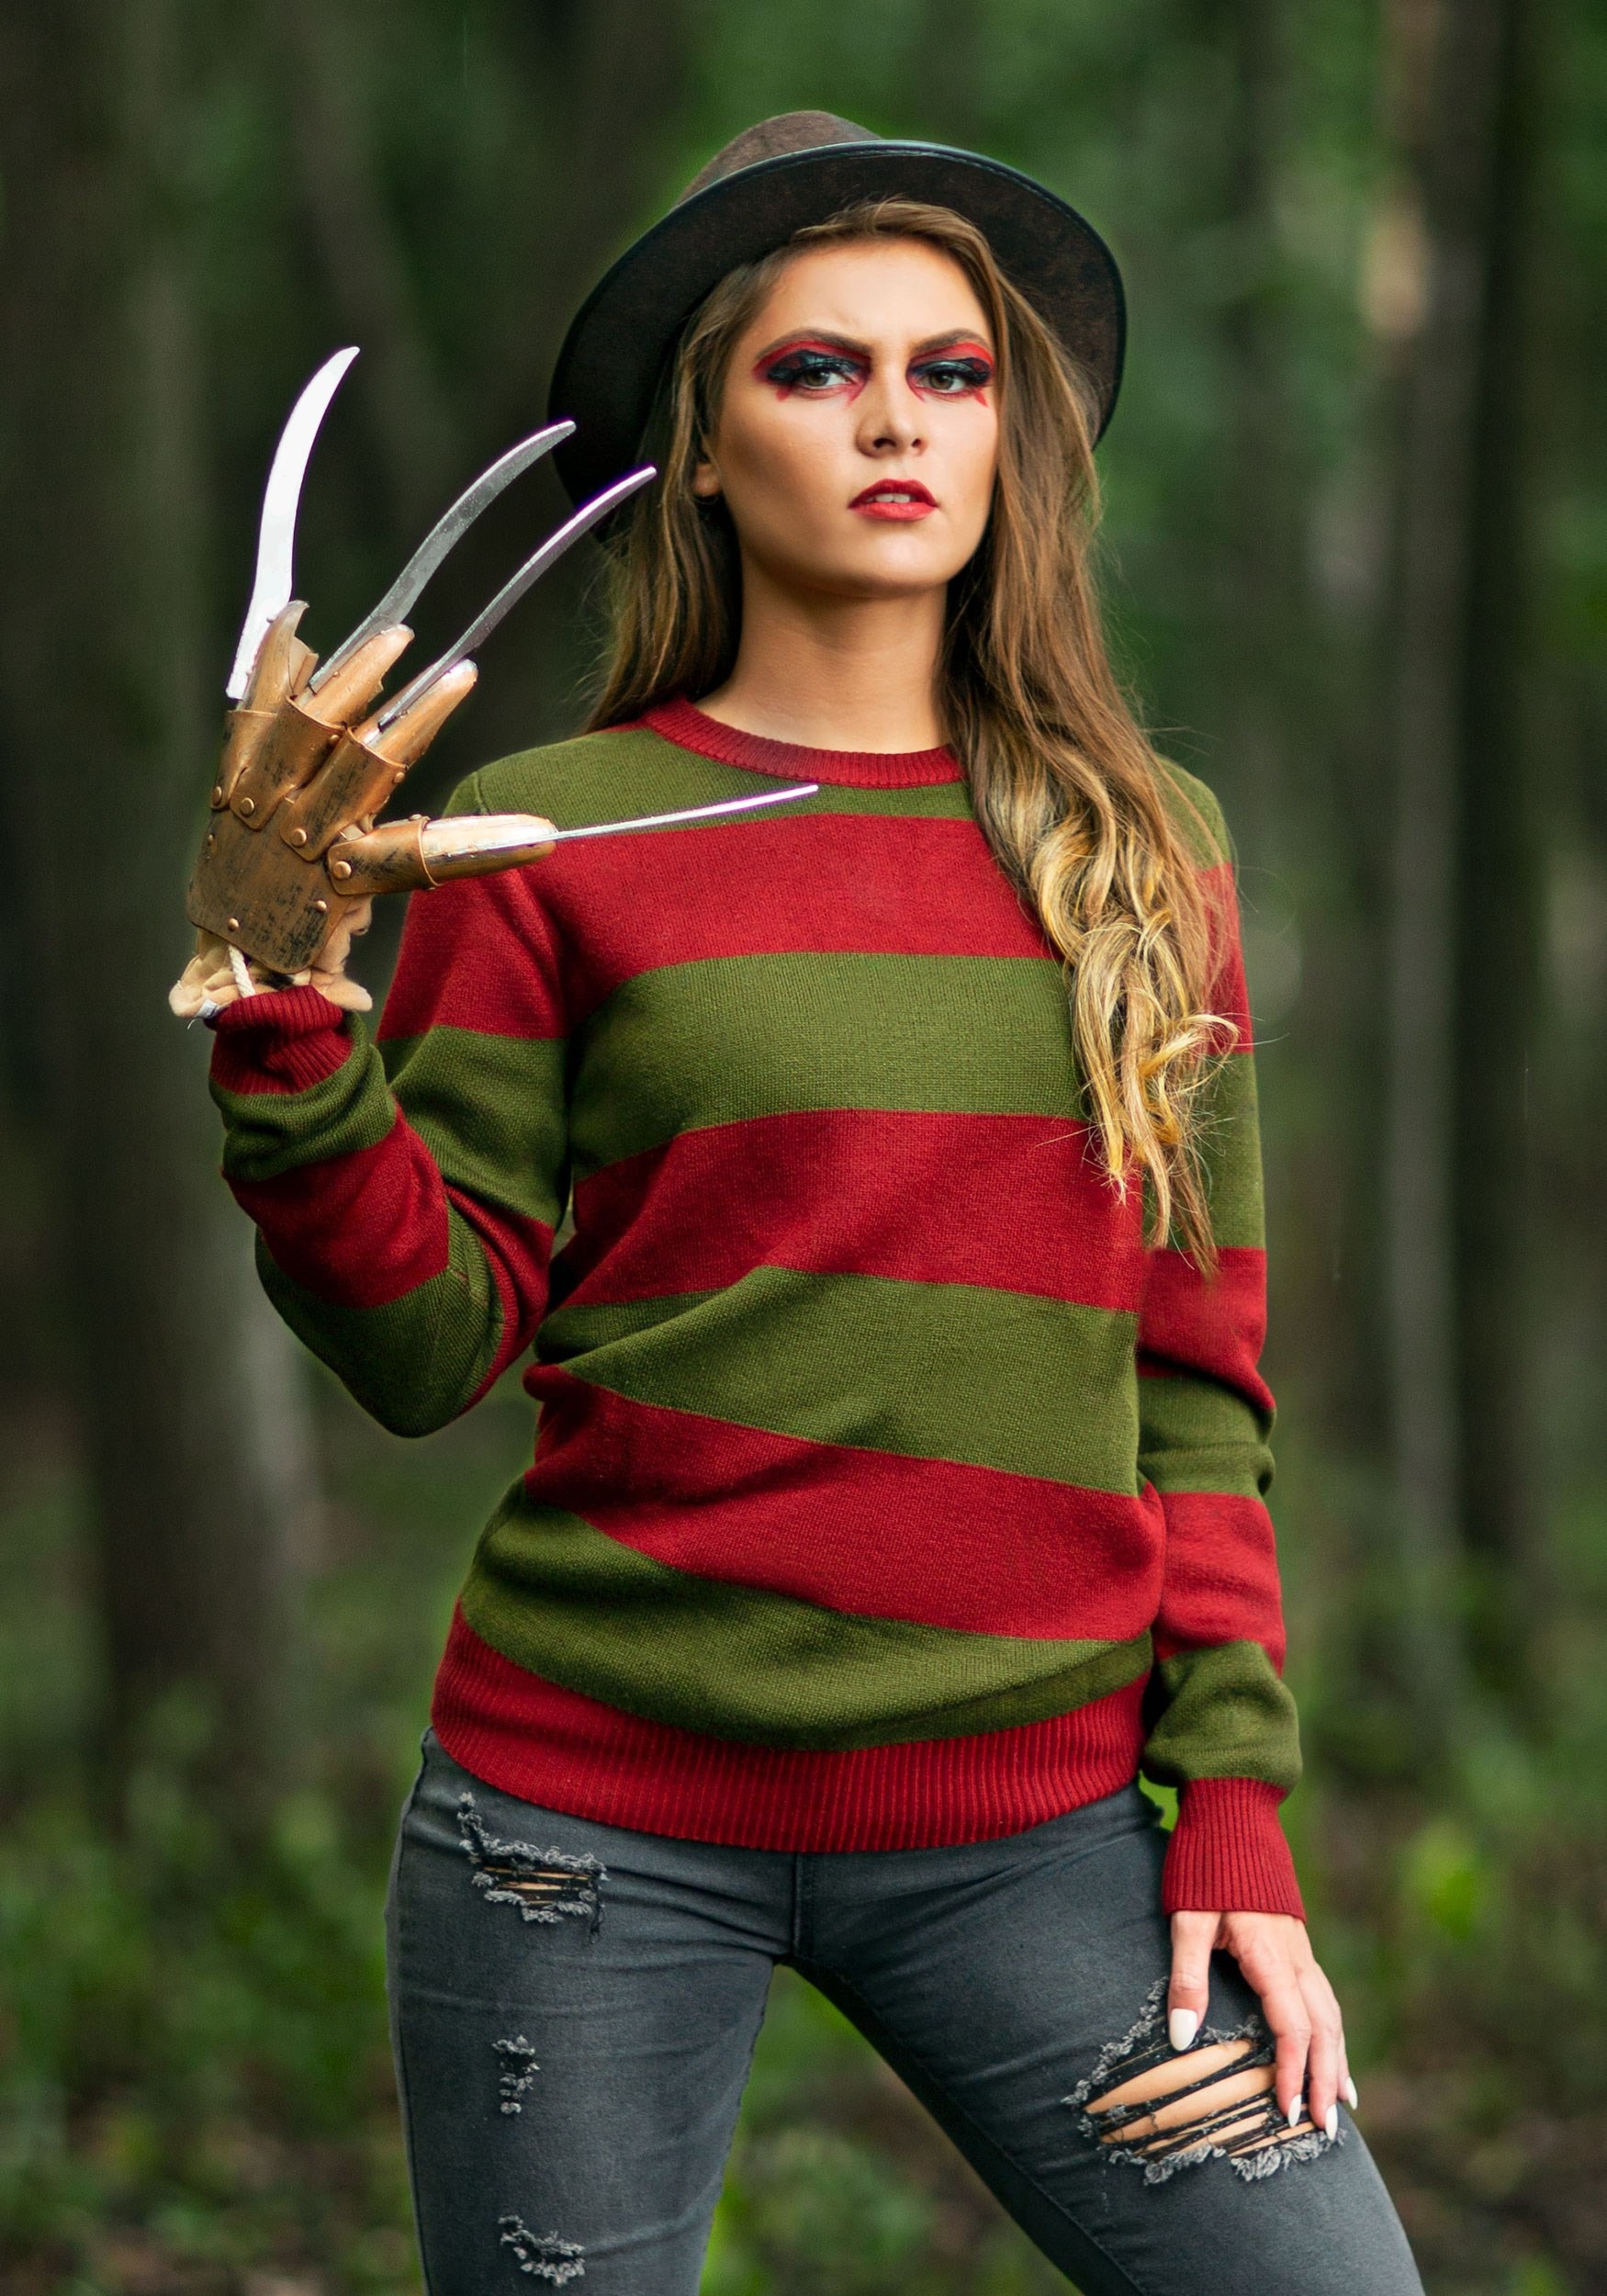 Kostüme And Verkleidungen Freddy Krueger Deluxe Sweater Adult Xl Plus